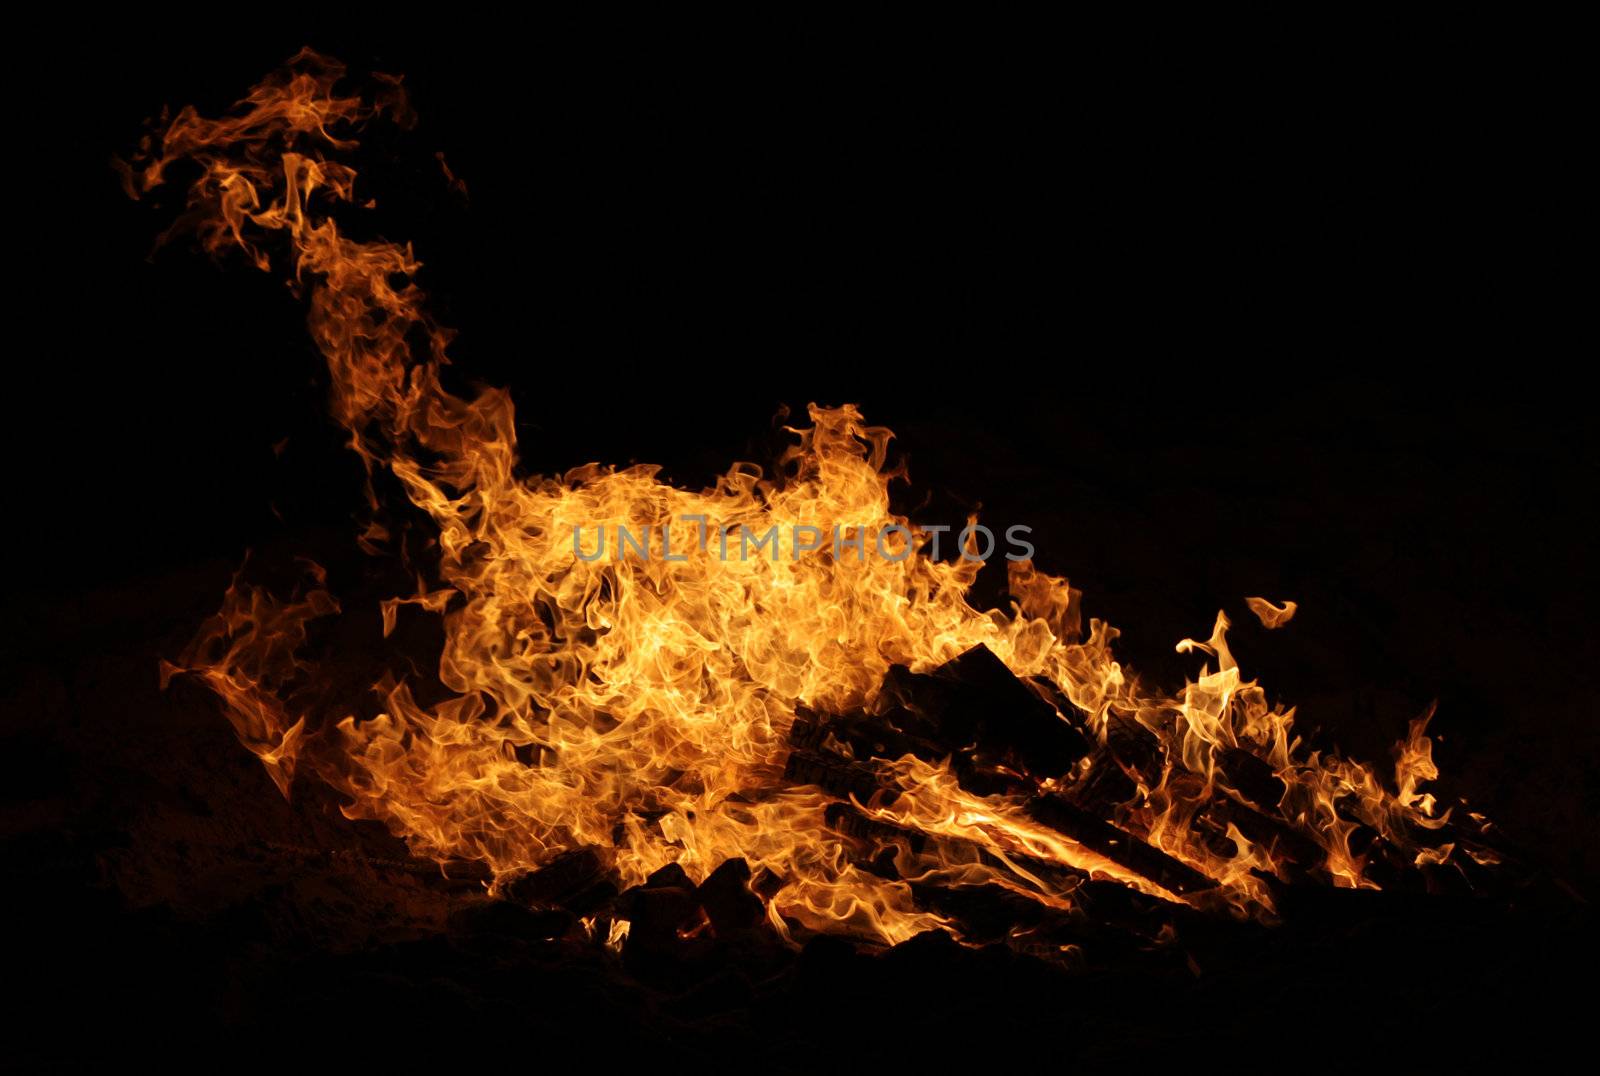 A raging bonfire burns on the beach.
